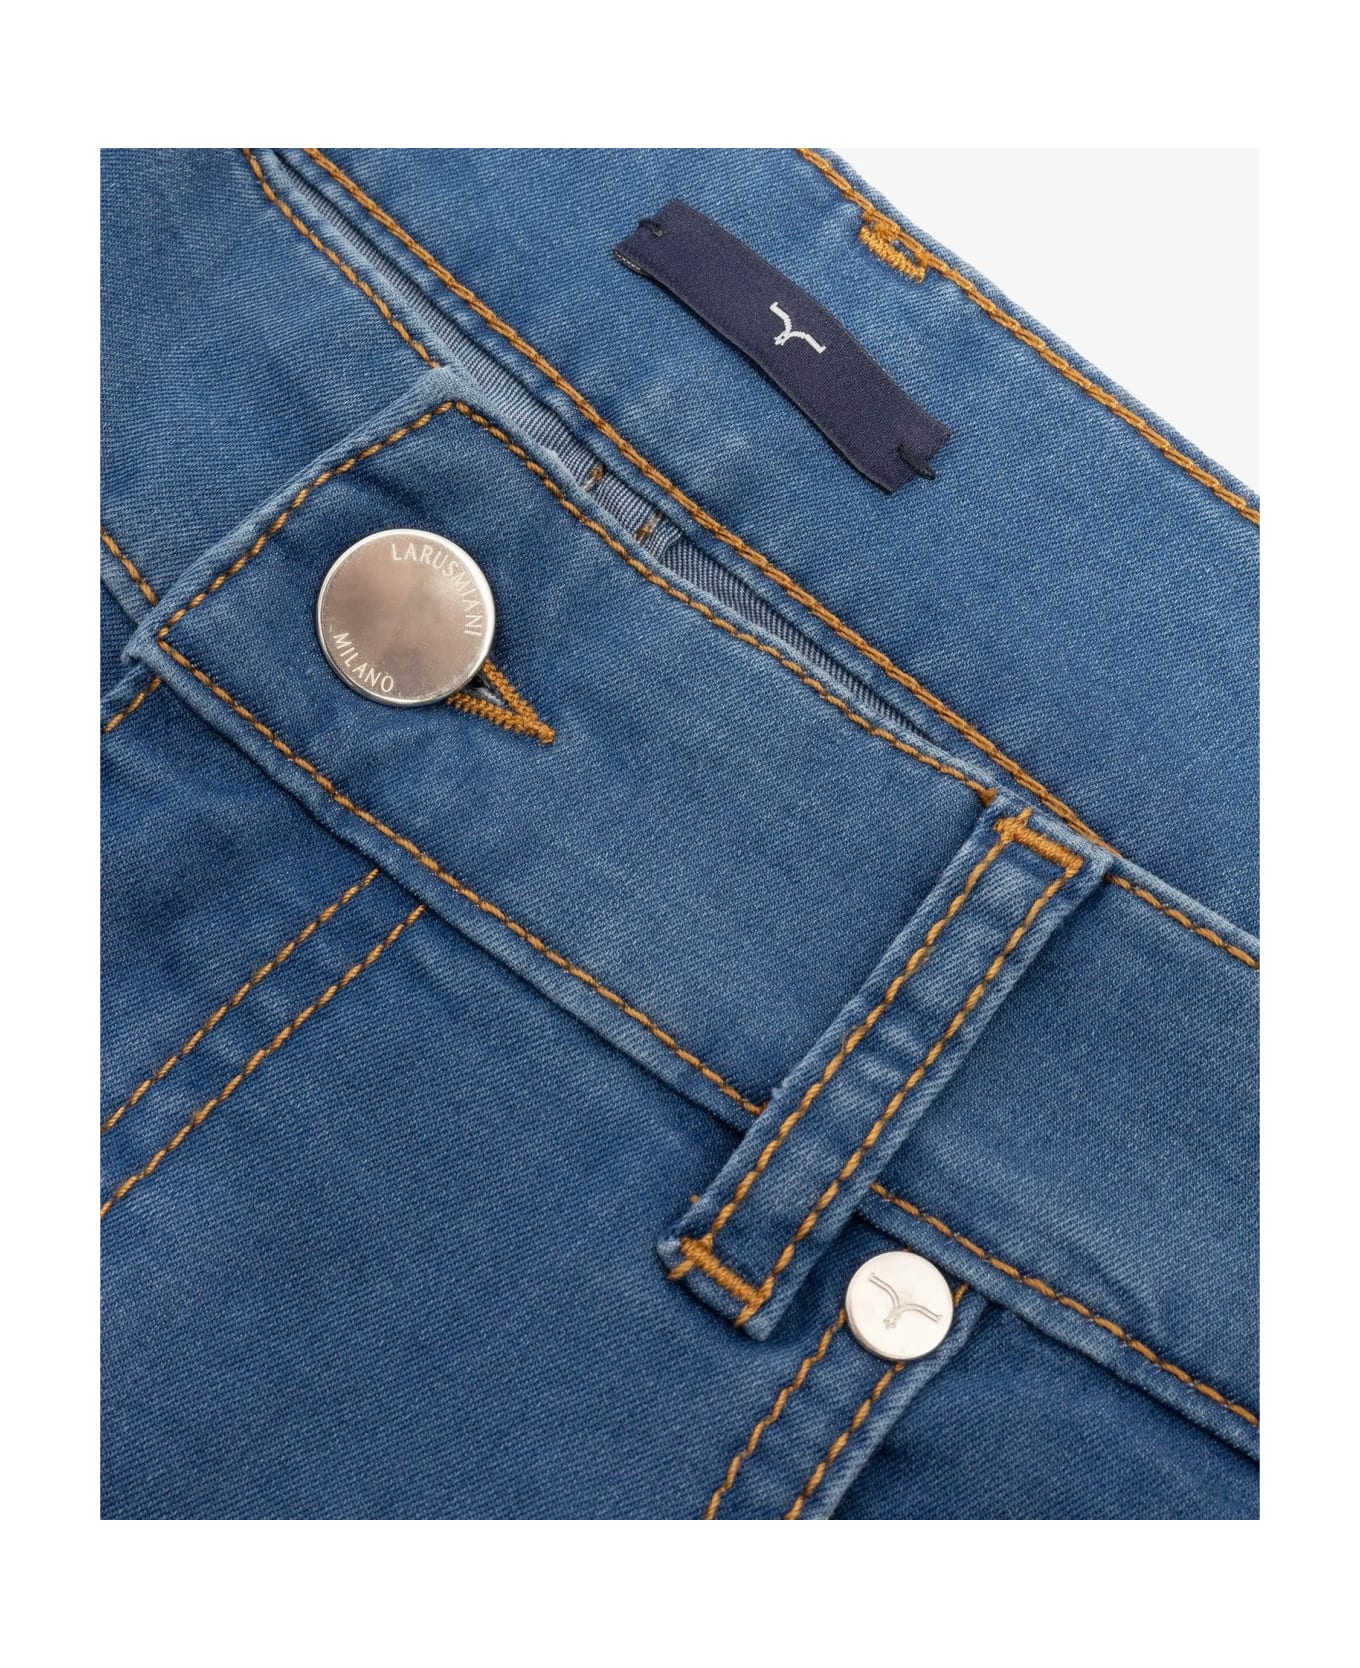 Larusmiani Trousers Jeans Five Pockets Jeans - LightBlue デニム